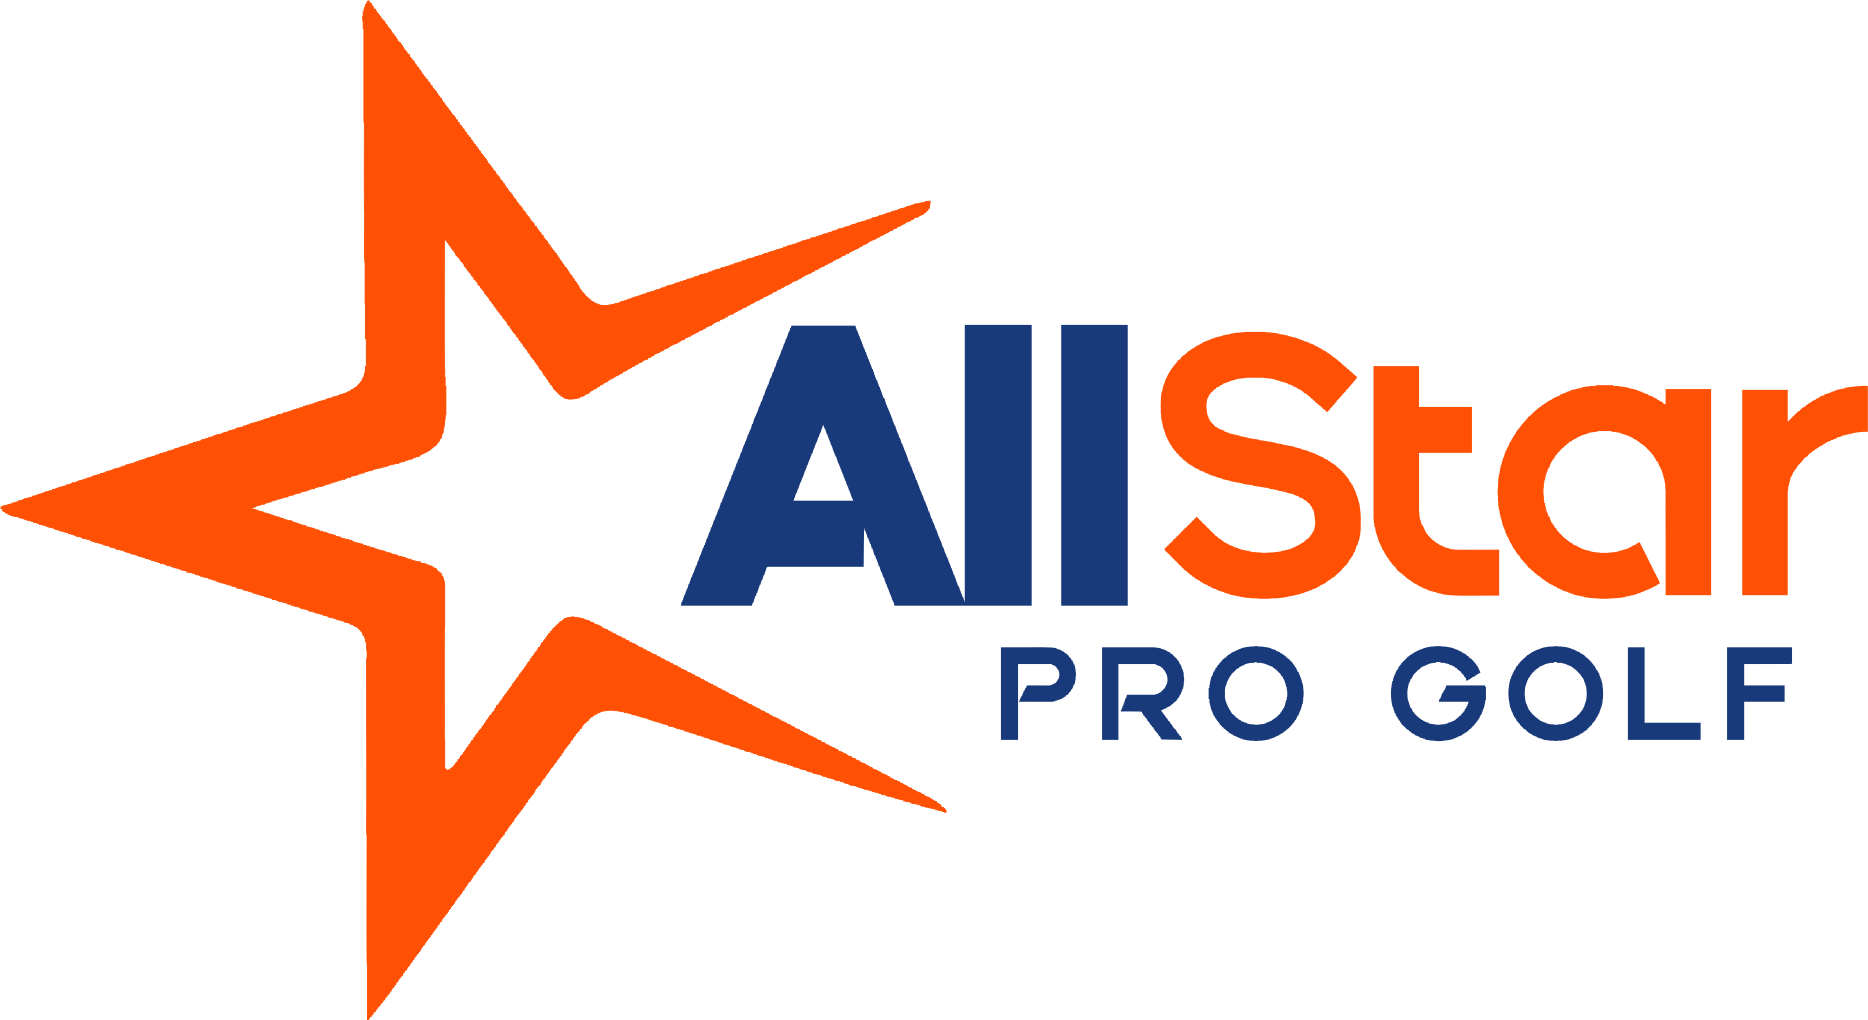 All Star Pro Golf